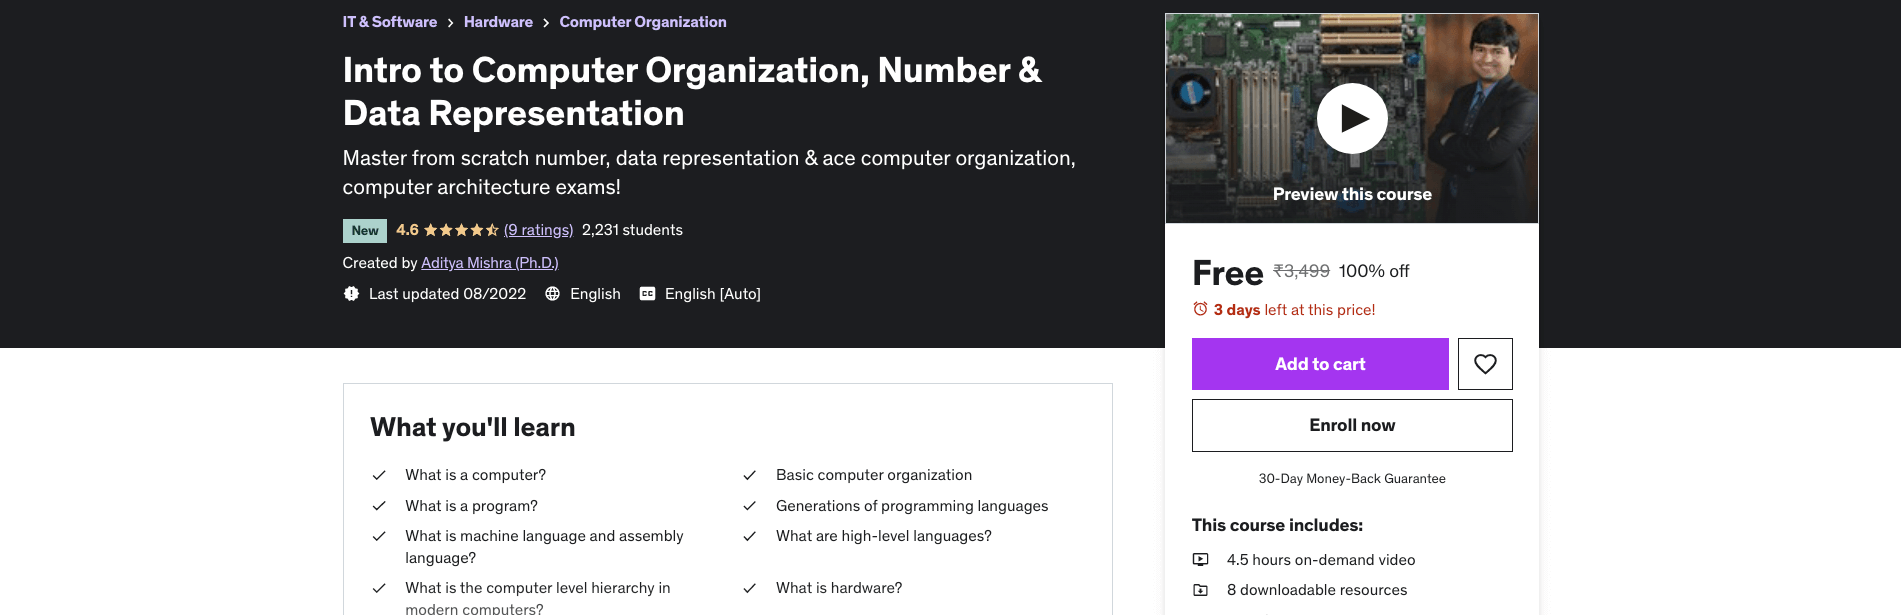 Intro to Computer Organization, Number & Data Representation